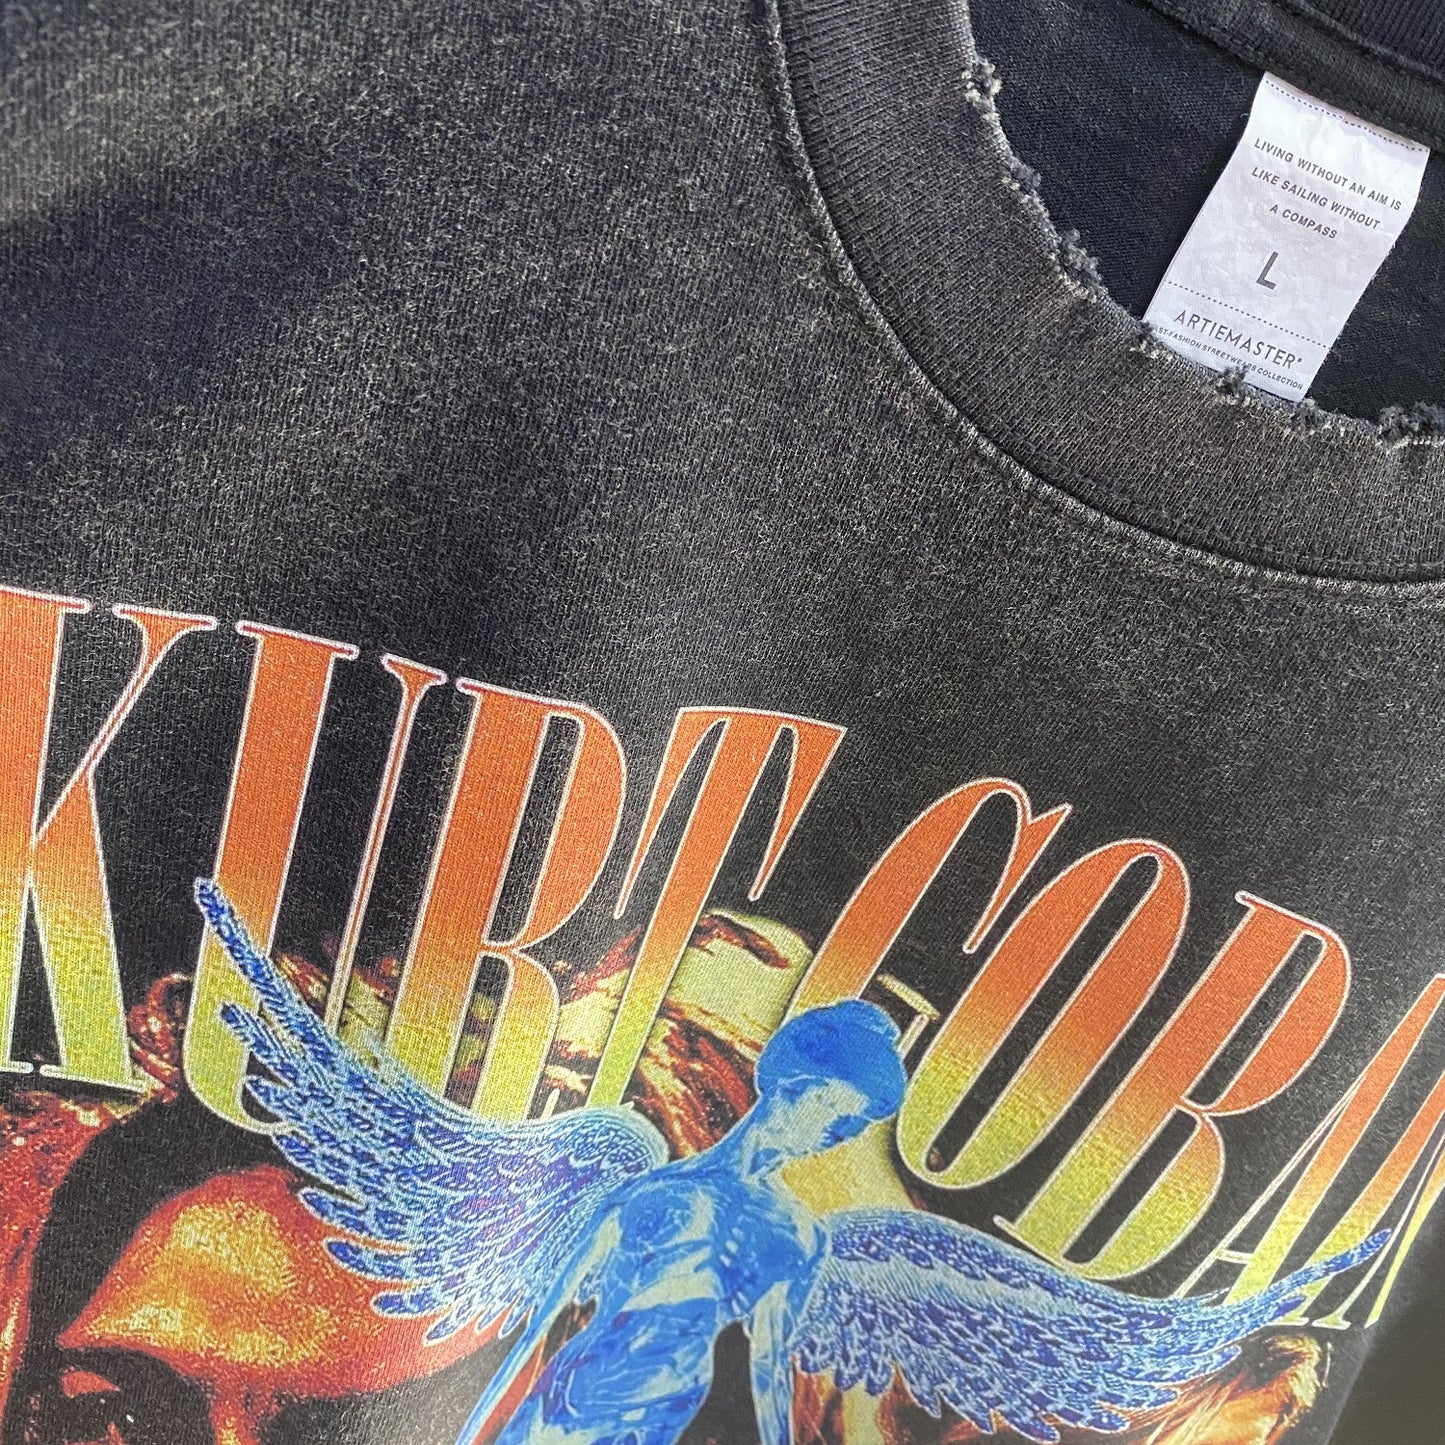 Kurt Cobain  Vintage Print T-Shirt OVERSIZE